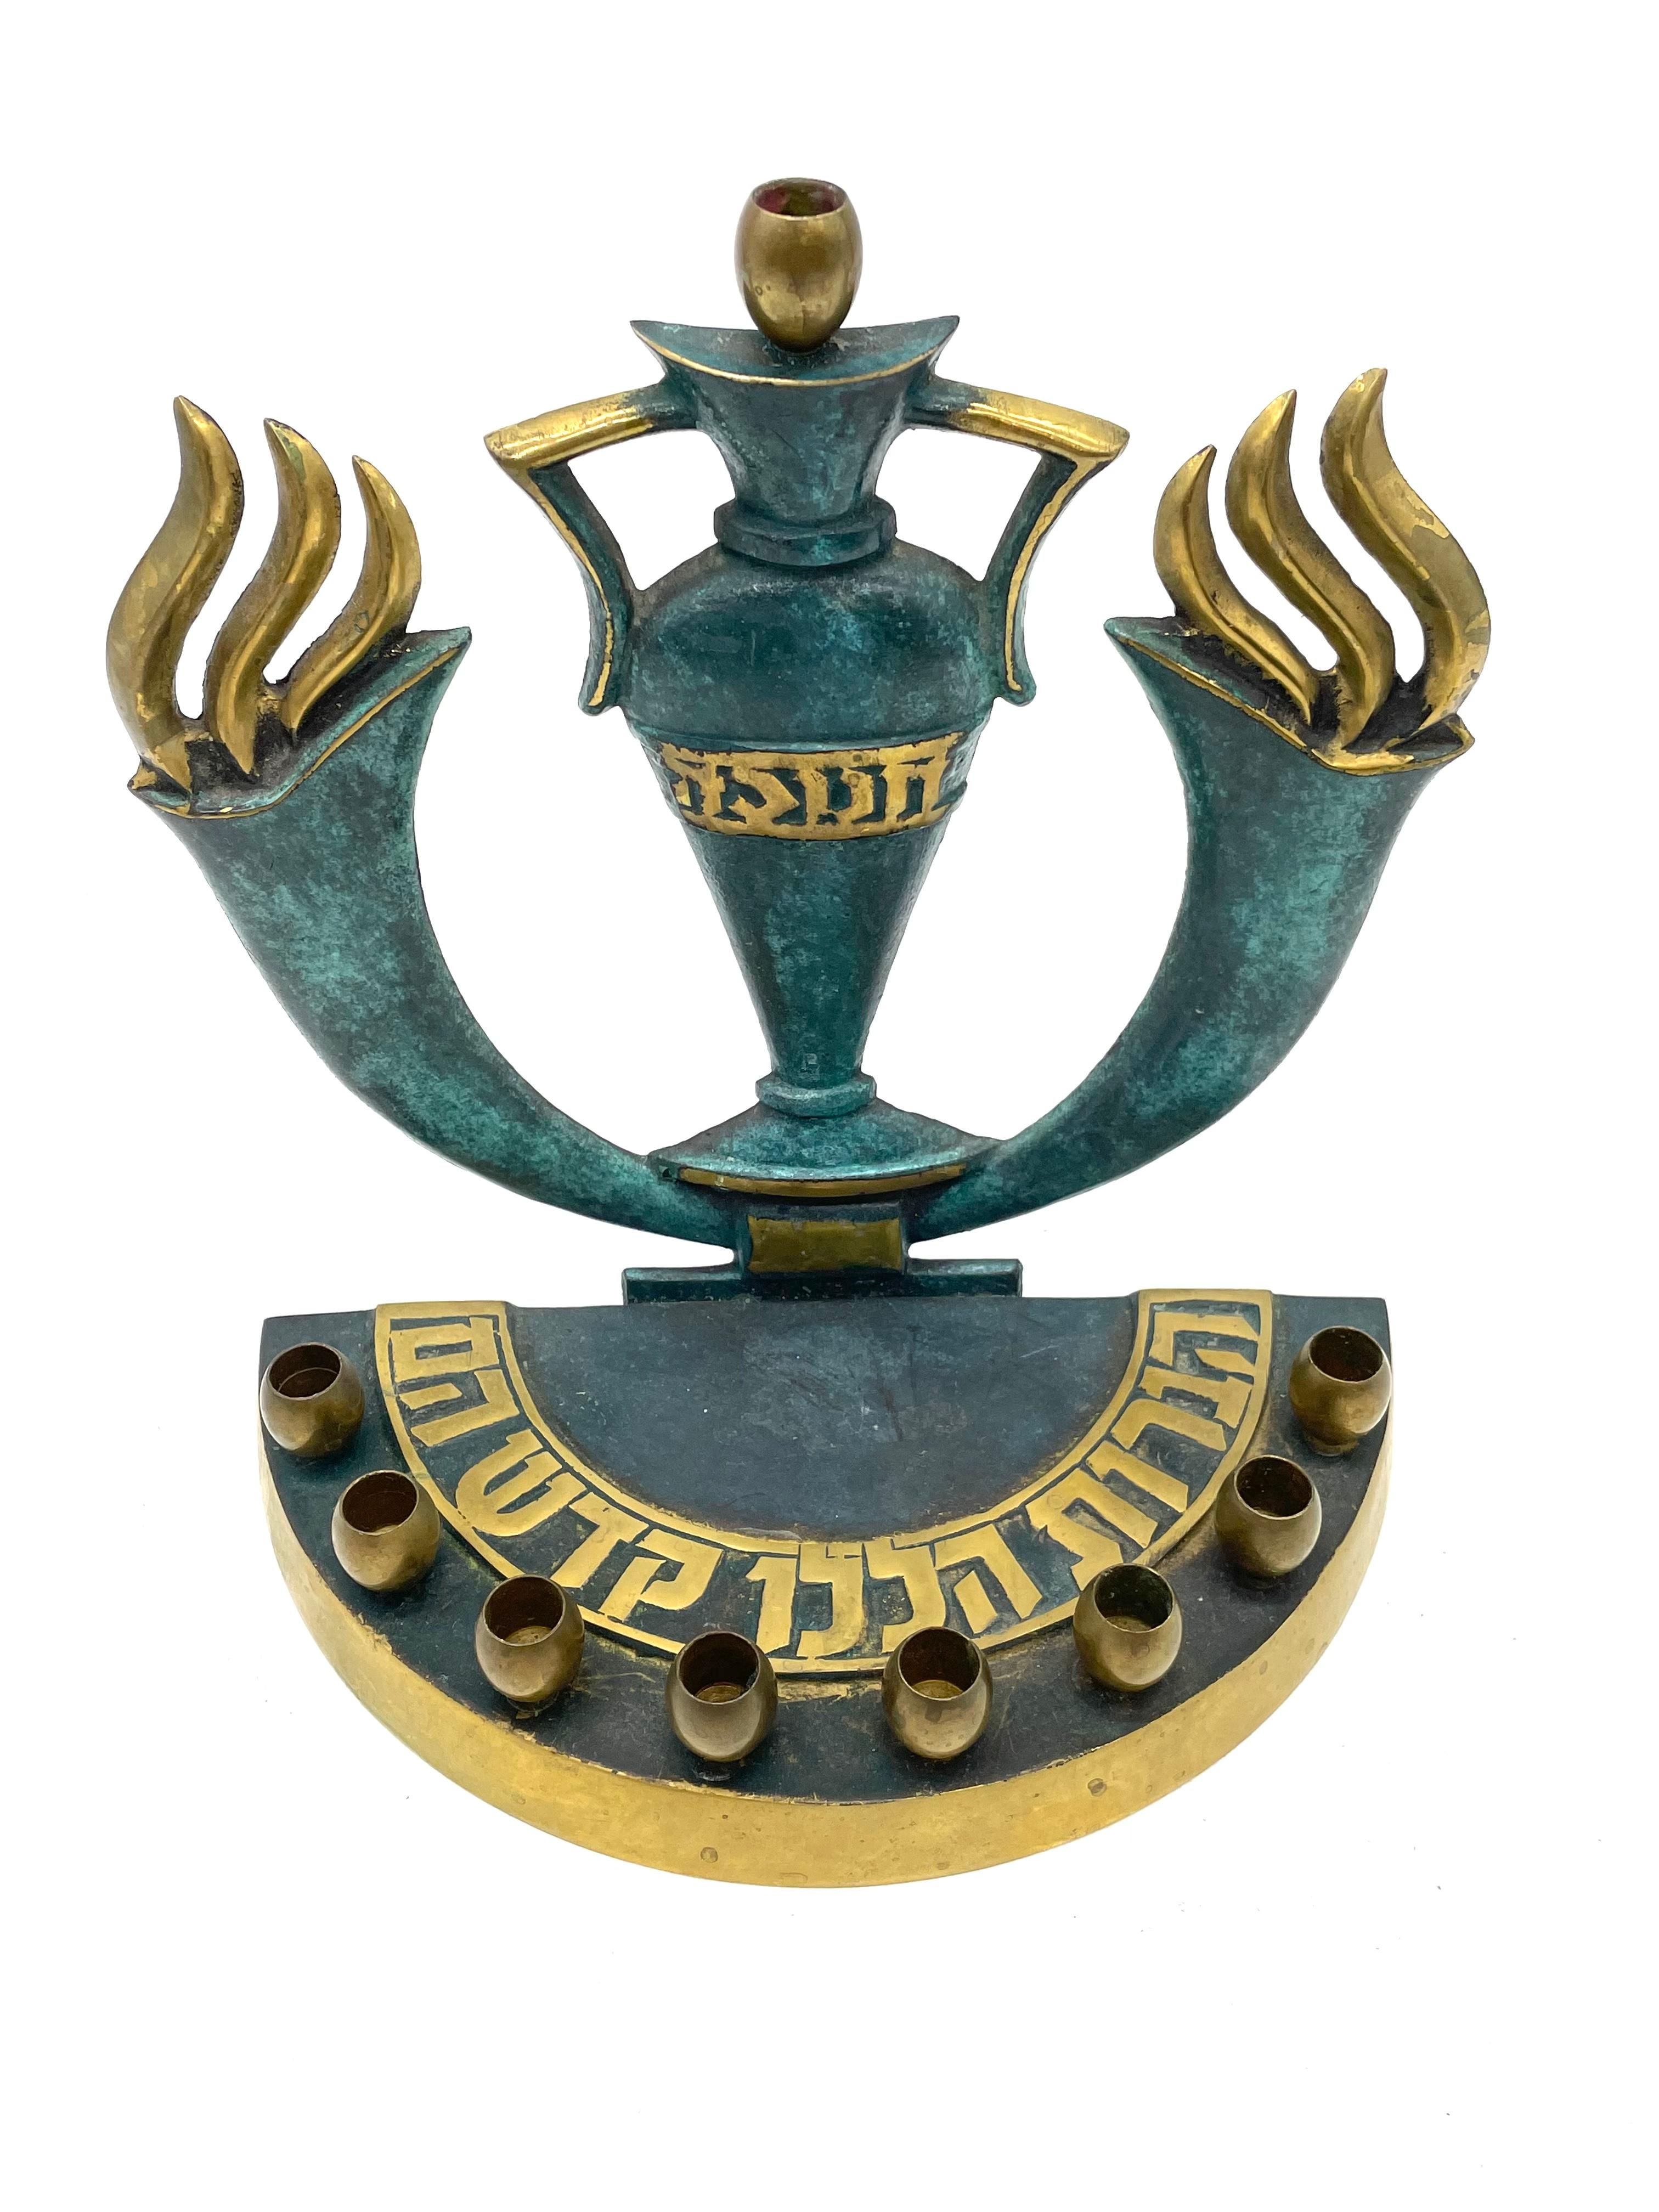 Messingguss, hergestellt in Israel, um 1950. Das hebräische Wort 